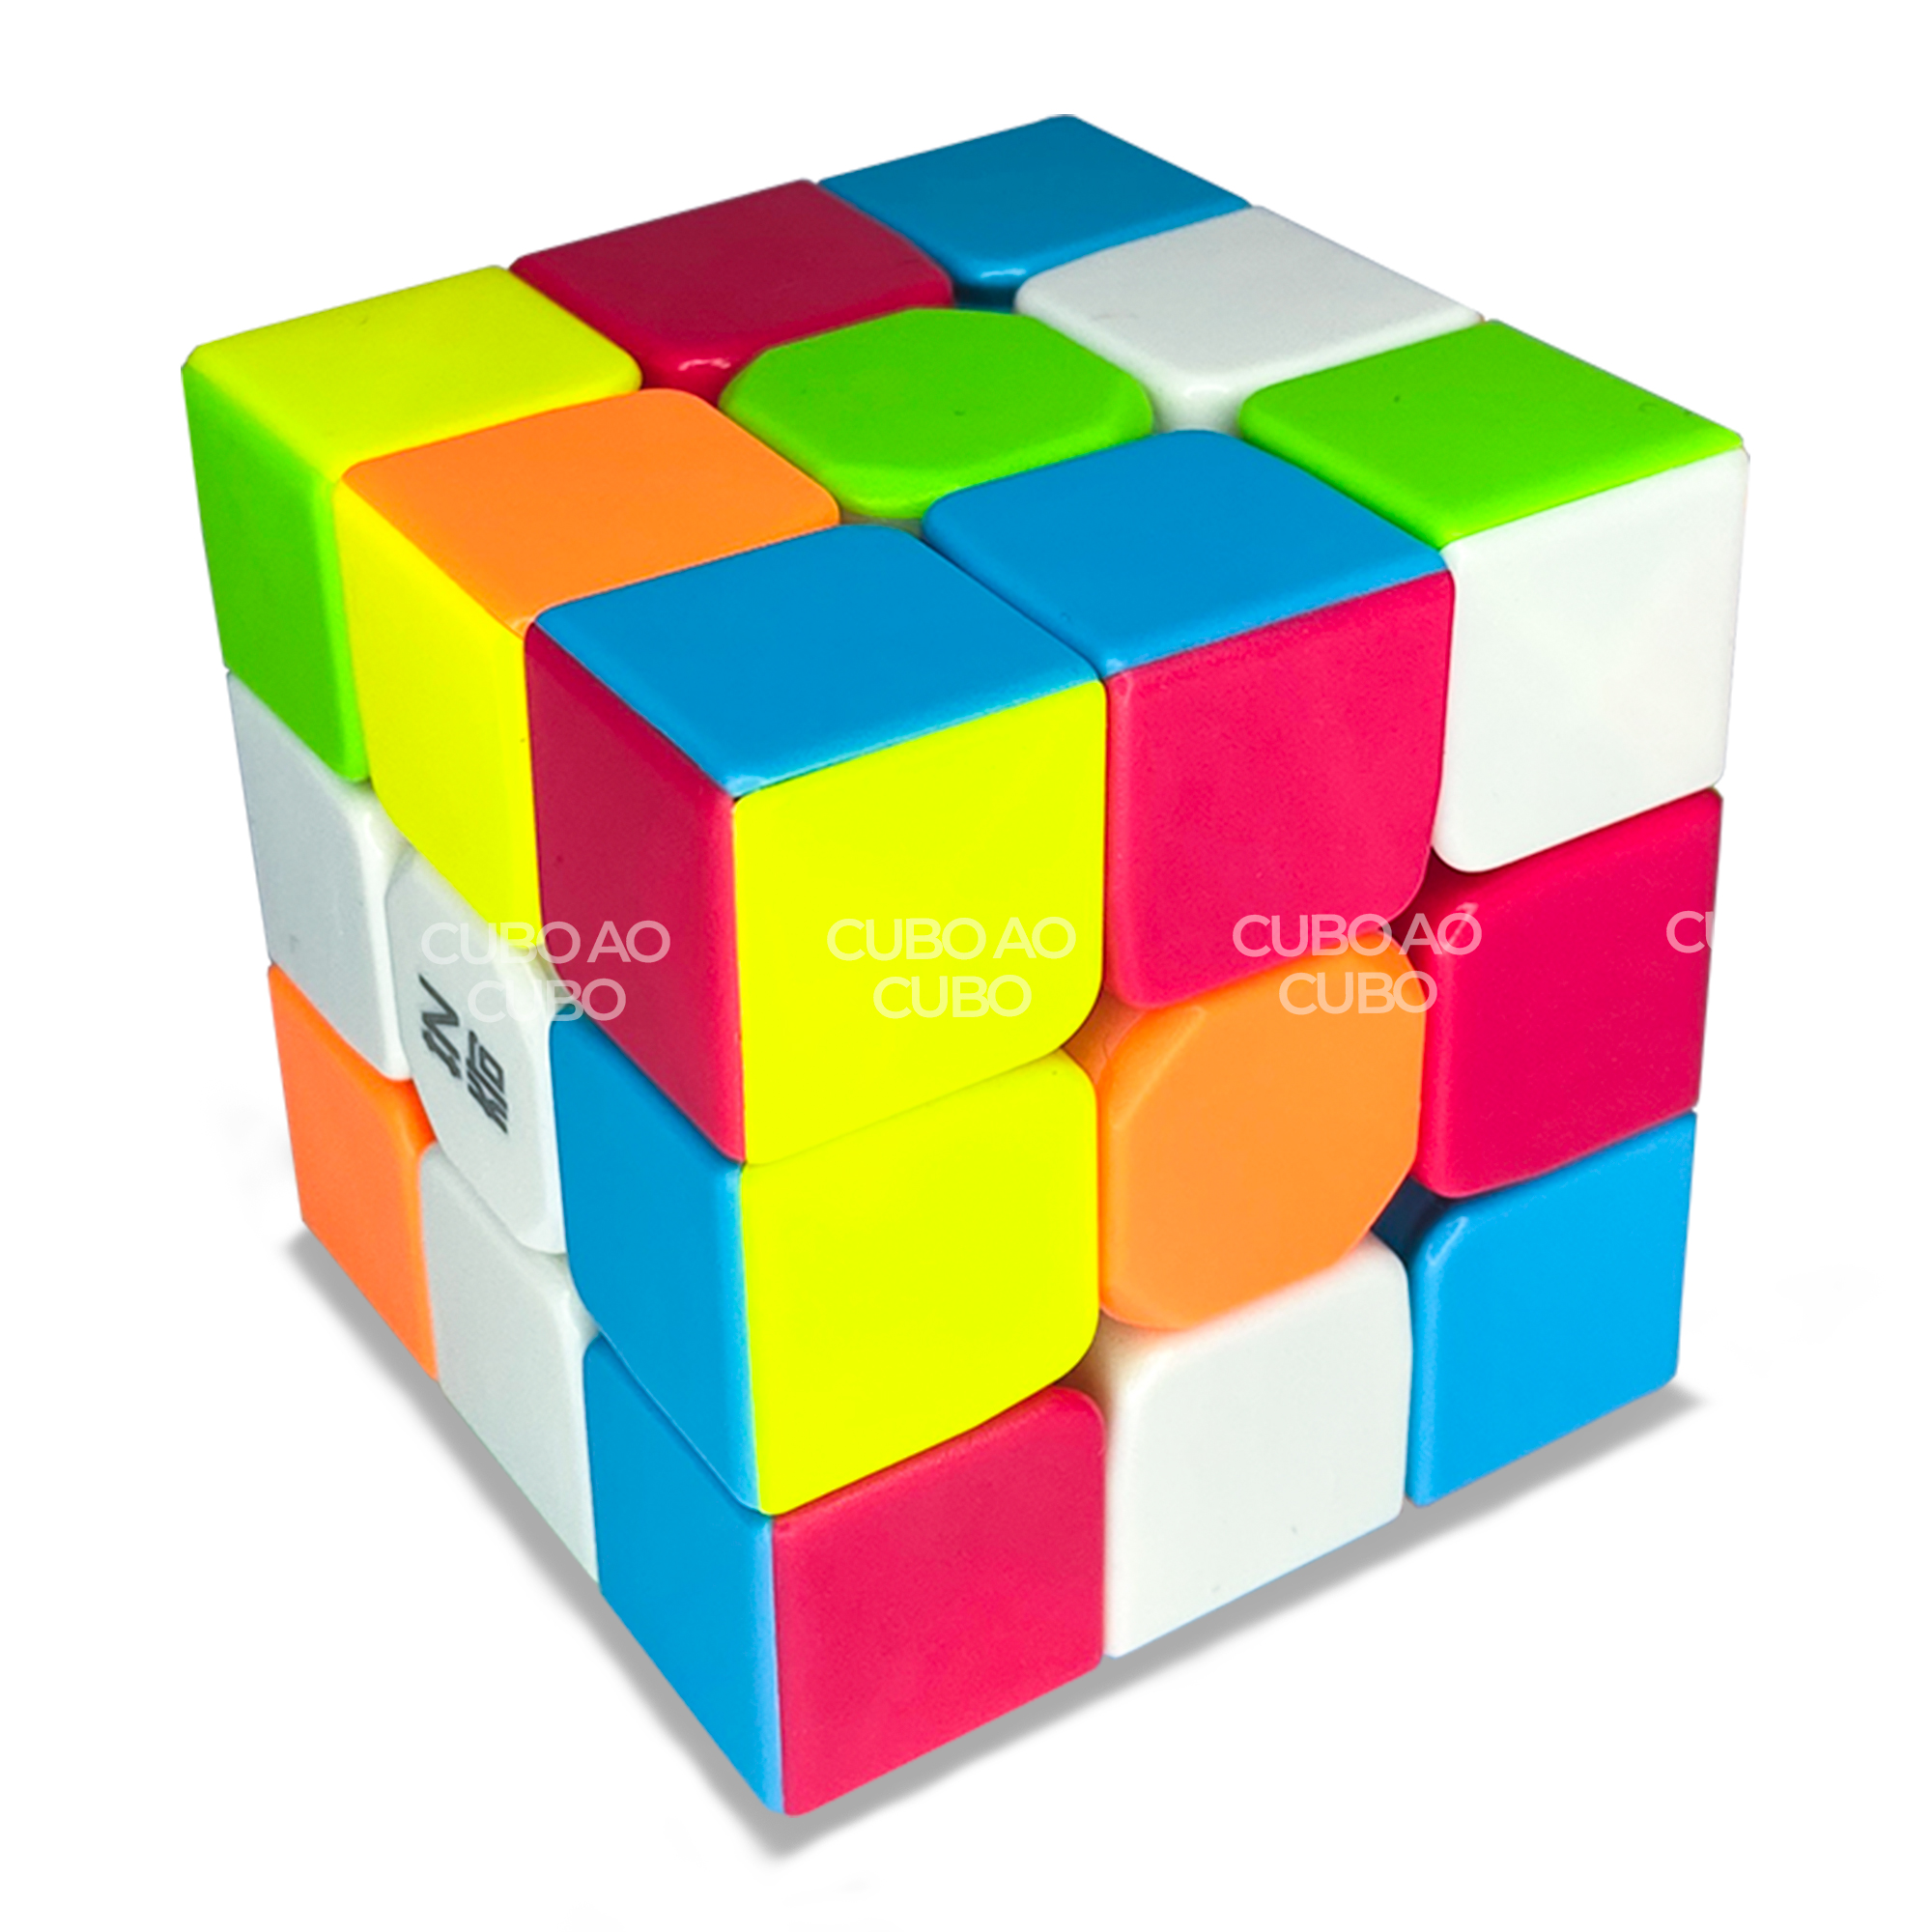 Cubo Magico 3x3x3 Qiyi M Pro Magnetico - Cubo Store